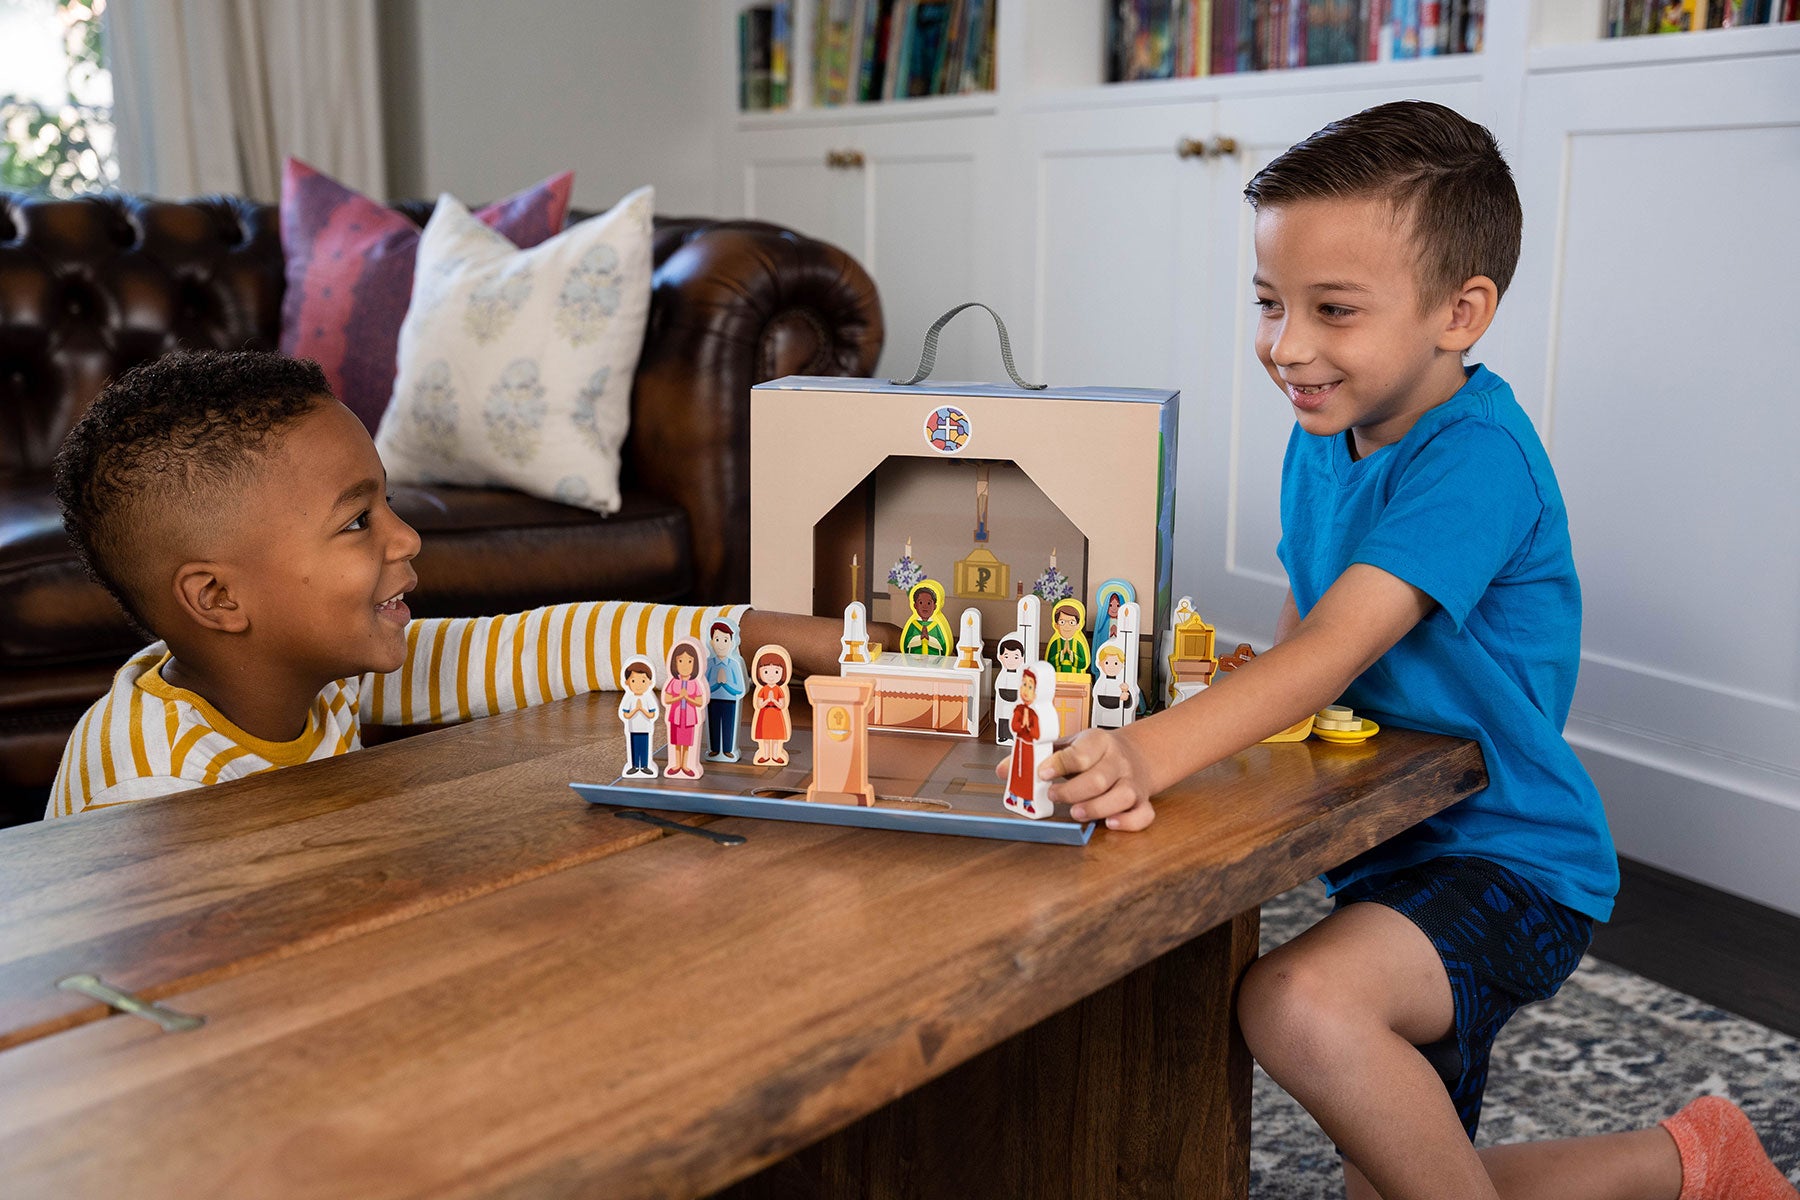  Playmobil Nursery Furniture Pack : Toys & Games